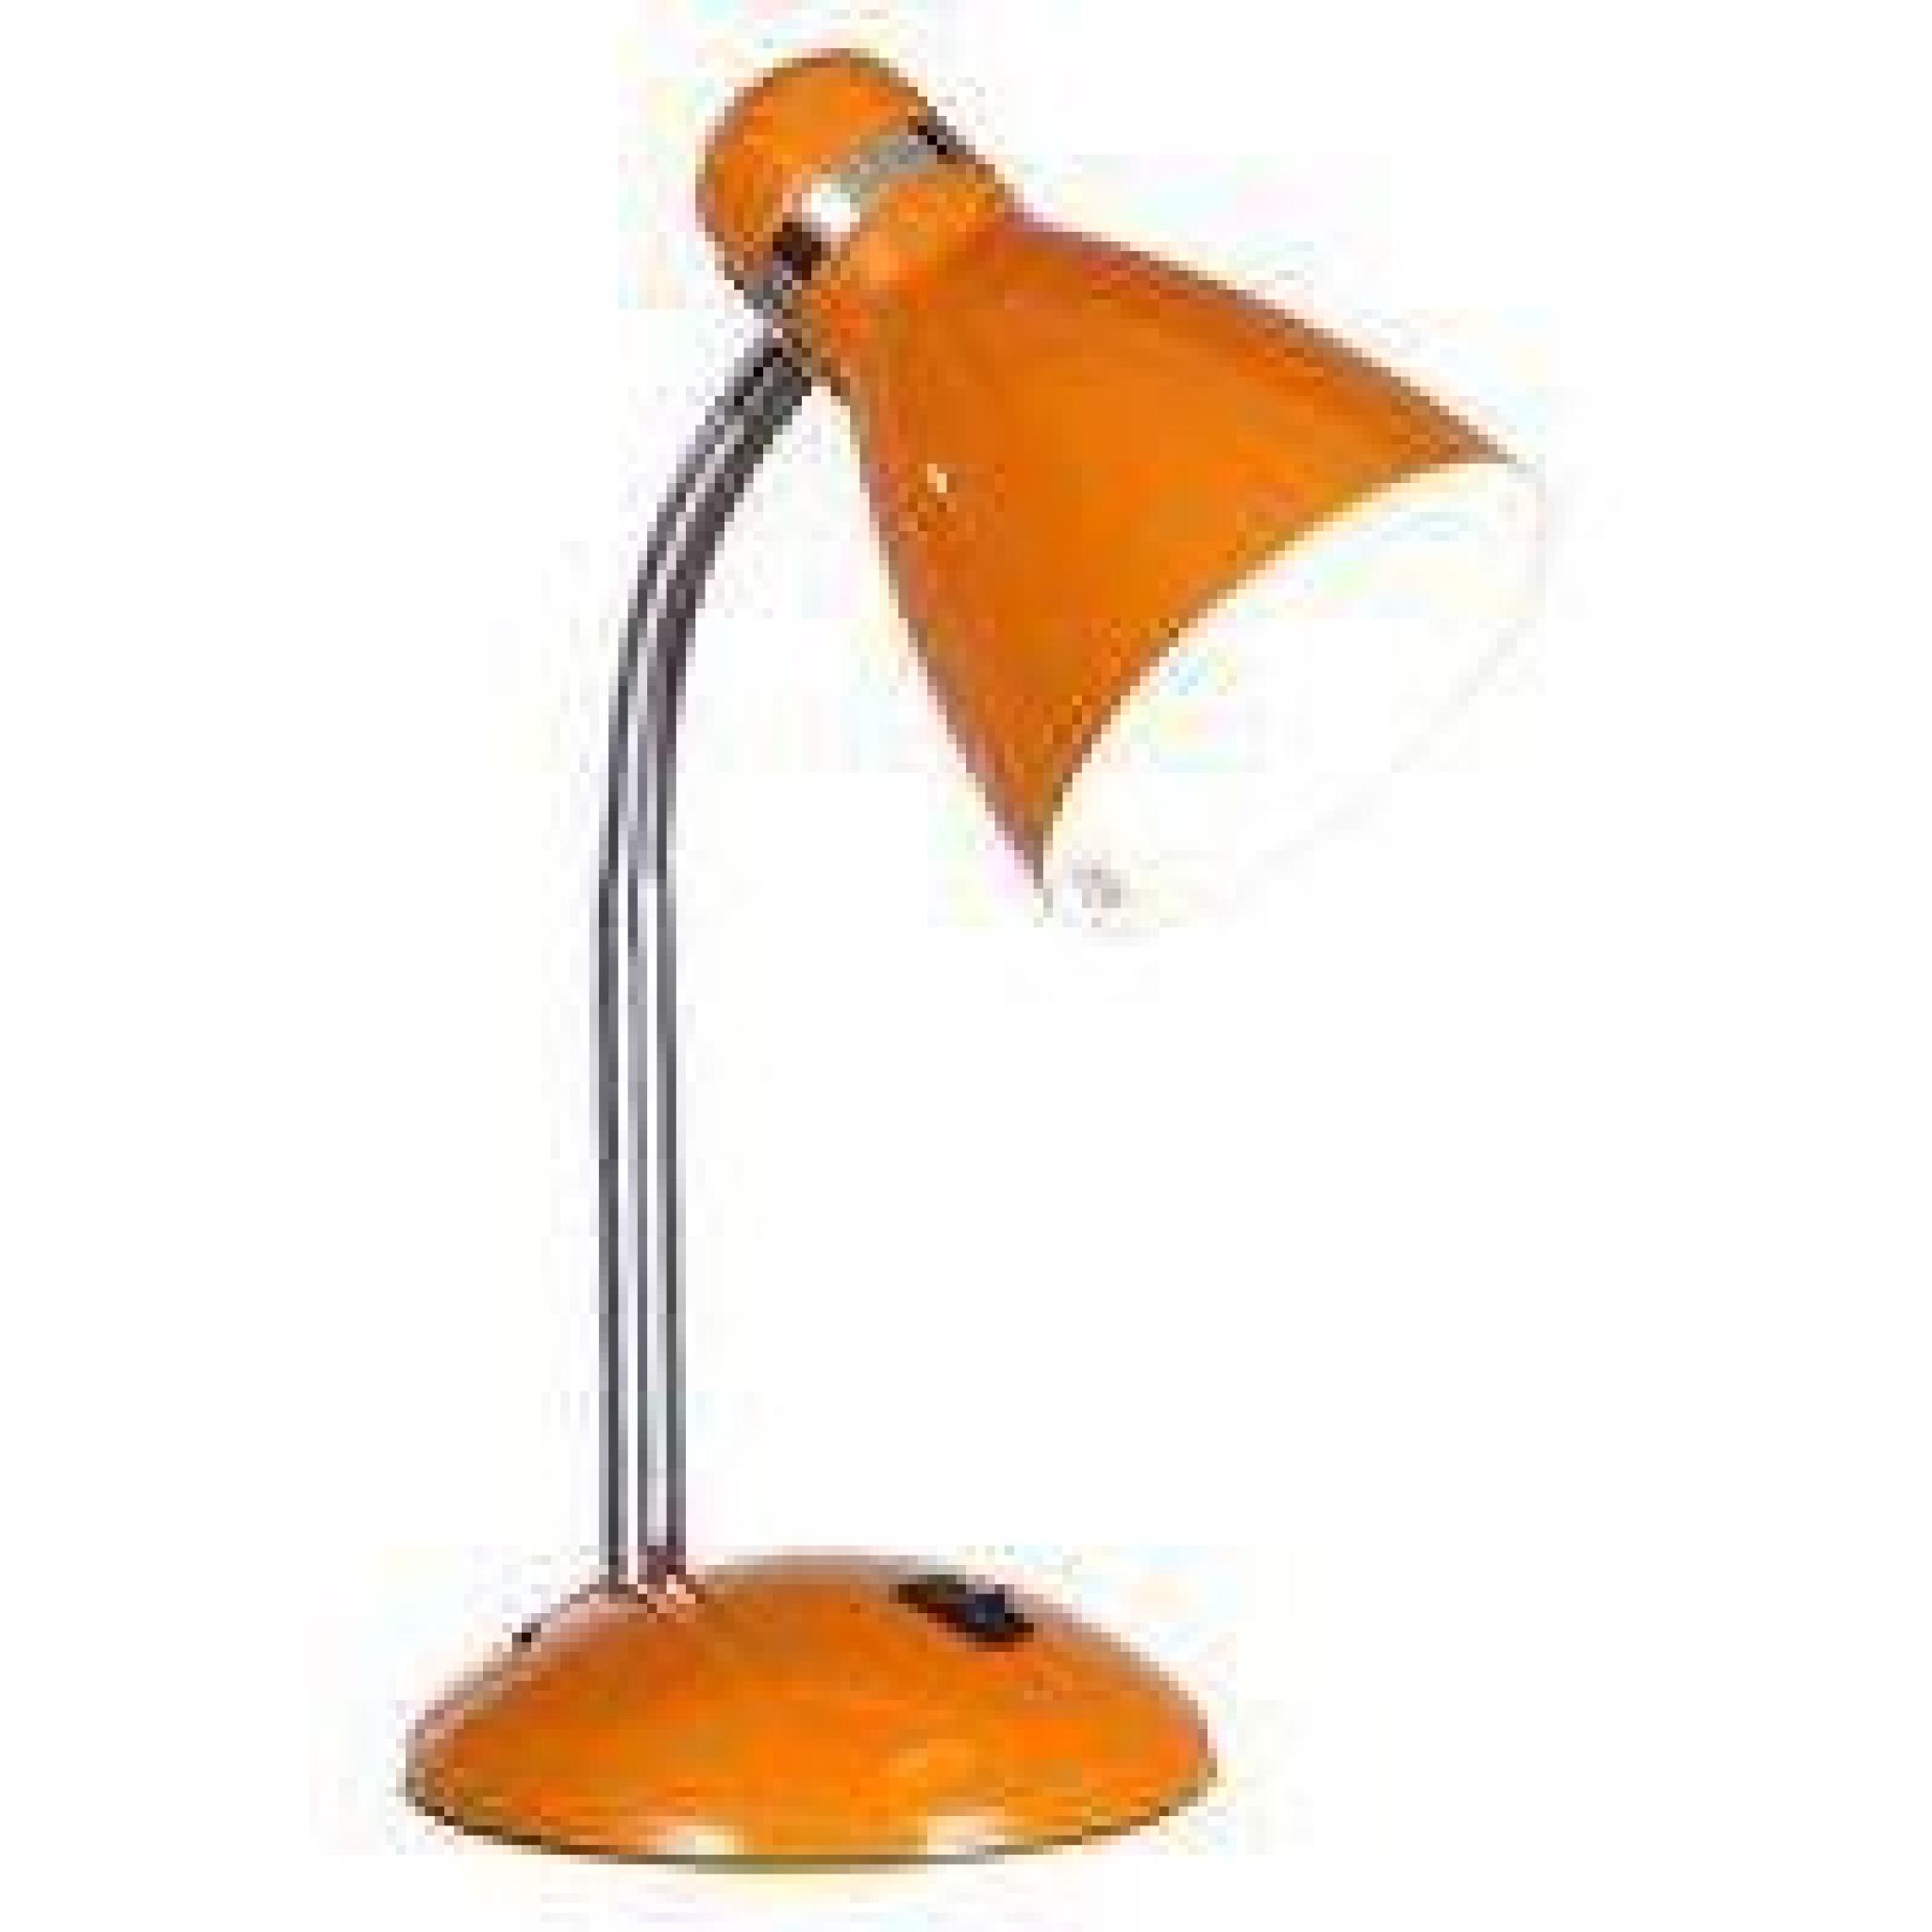 Lampe de bureau Métal Orange peint, Chrome Studio 60W - Boutica-Design pas cher